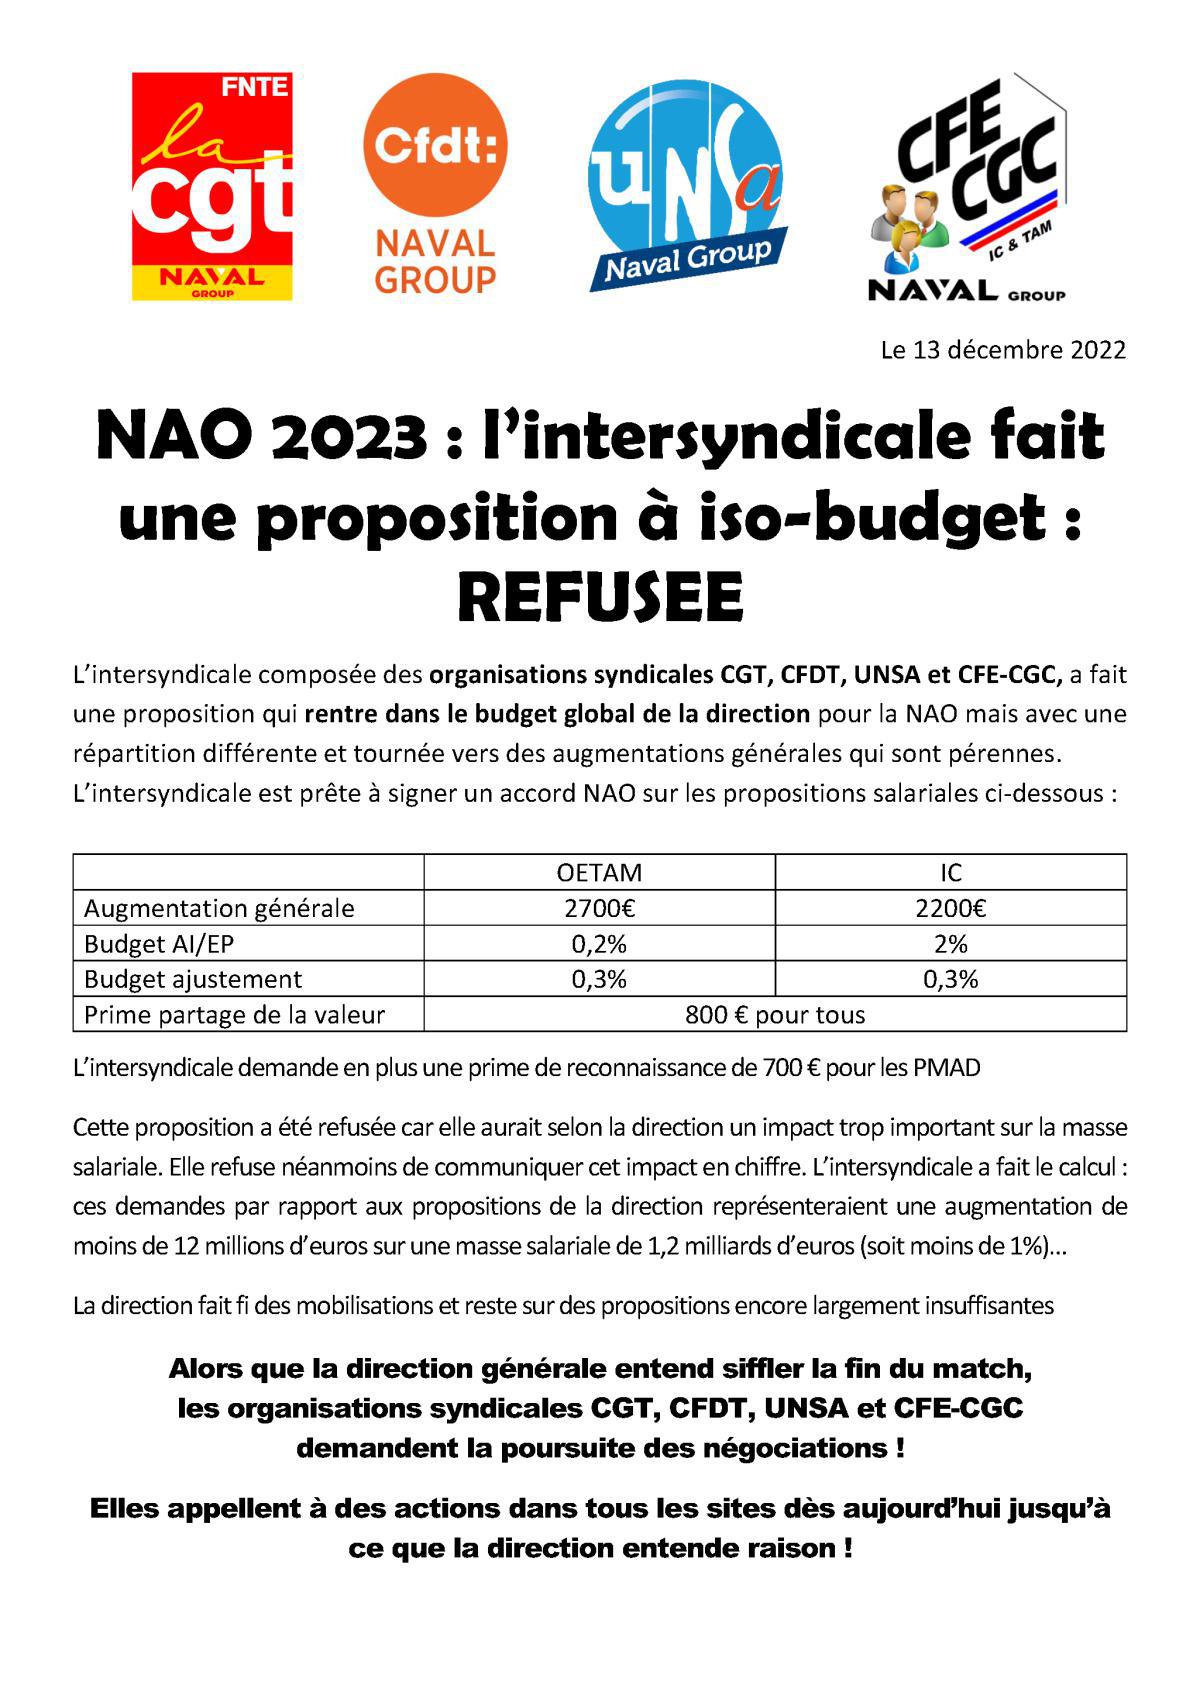 NAO 2023 : la proposition intersyndicale REFUSEE